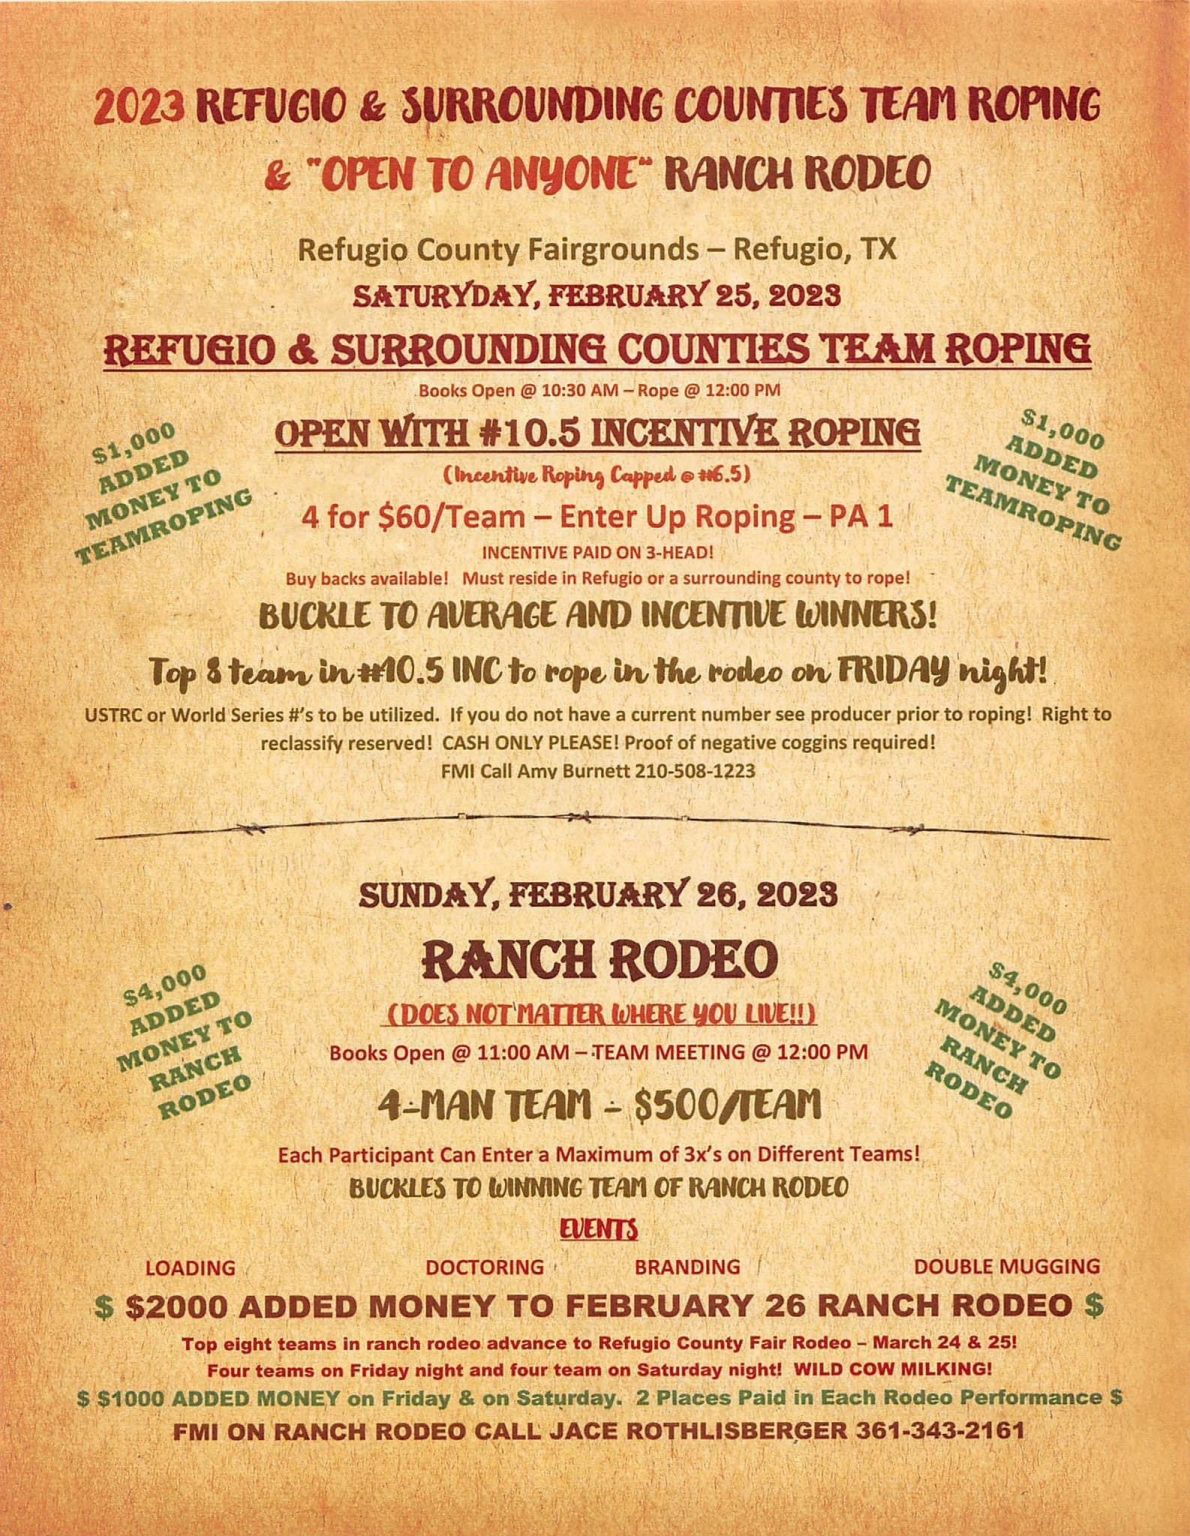 2023 Ranch Rodeo Refugio County Fair